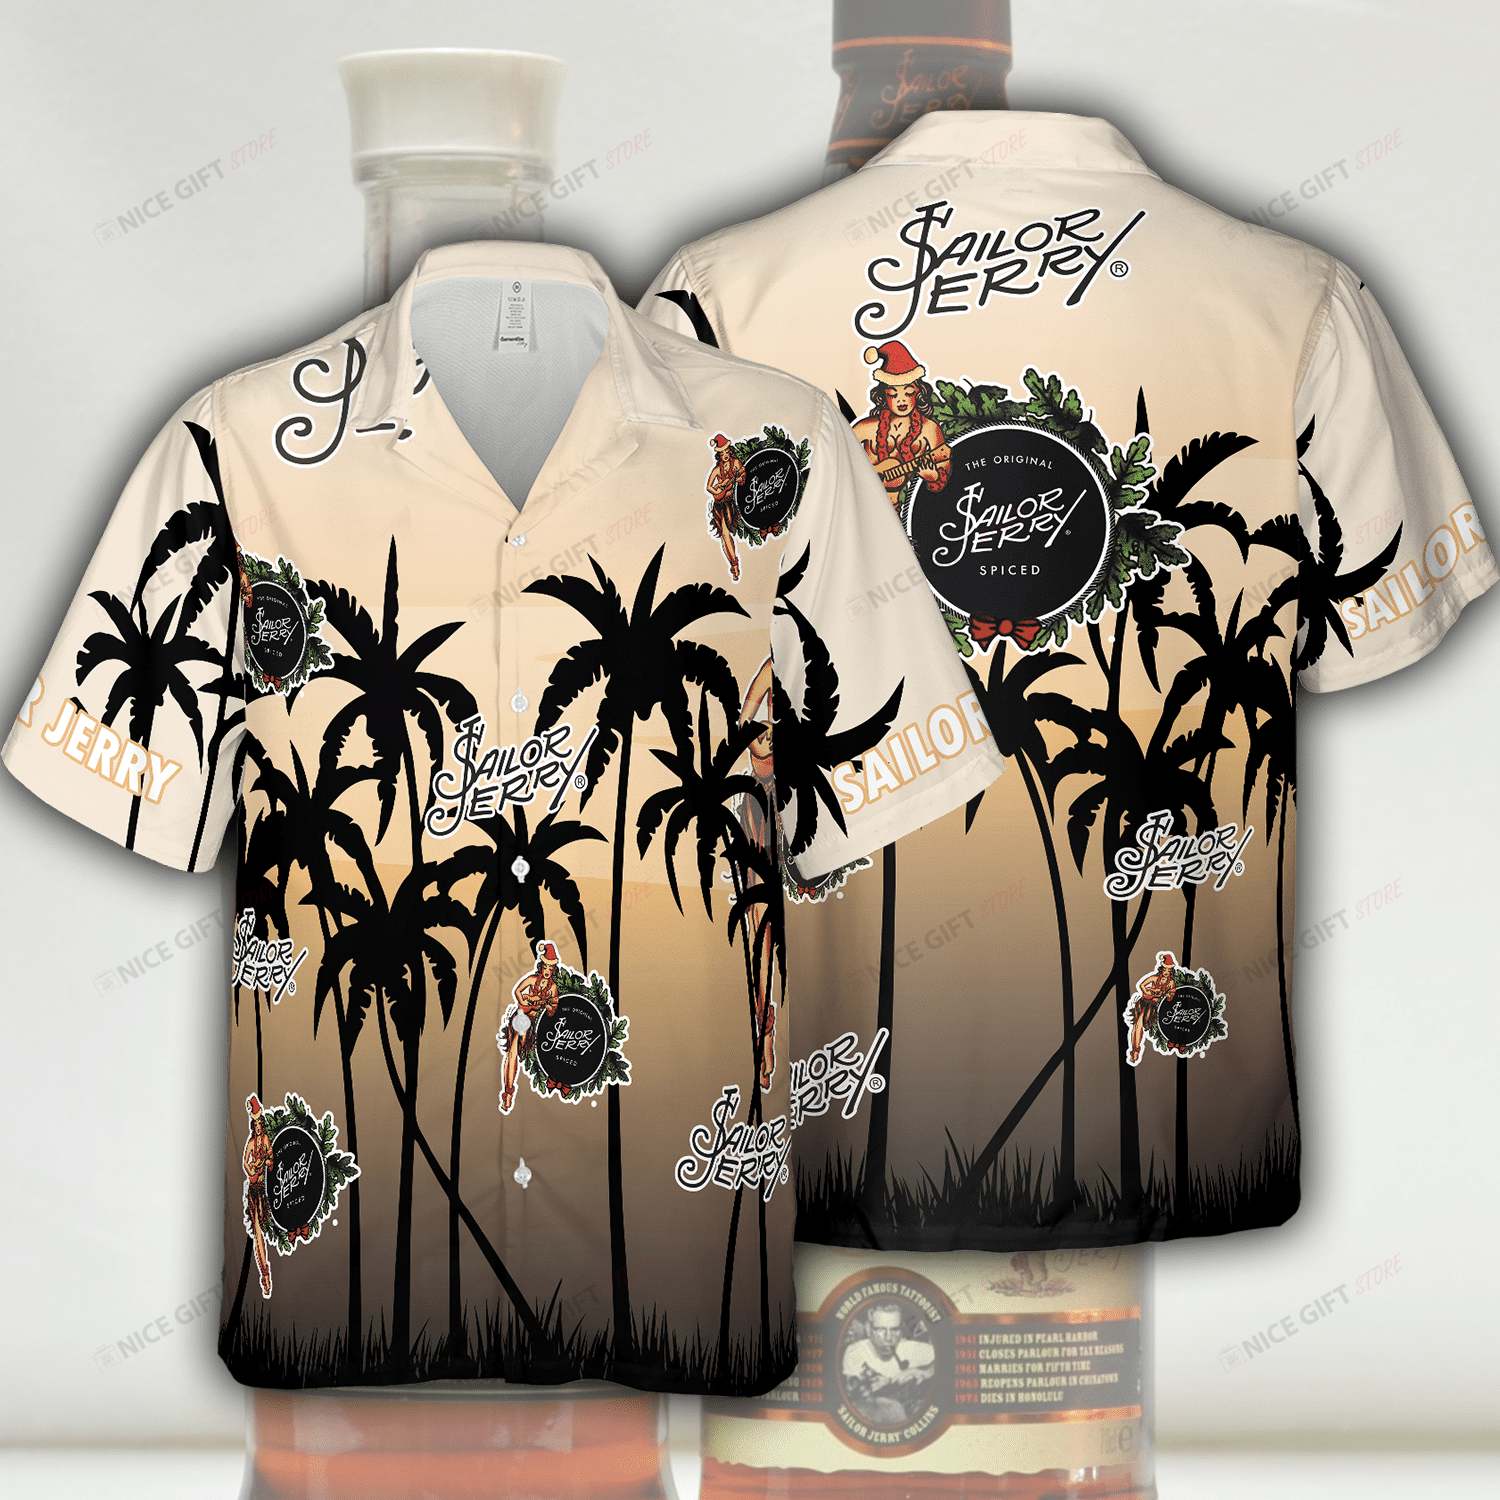 Consider Hot Trend Hawaiian shirt collection in 2022 82